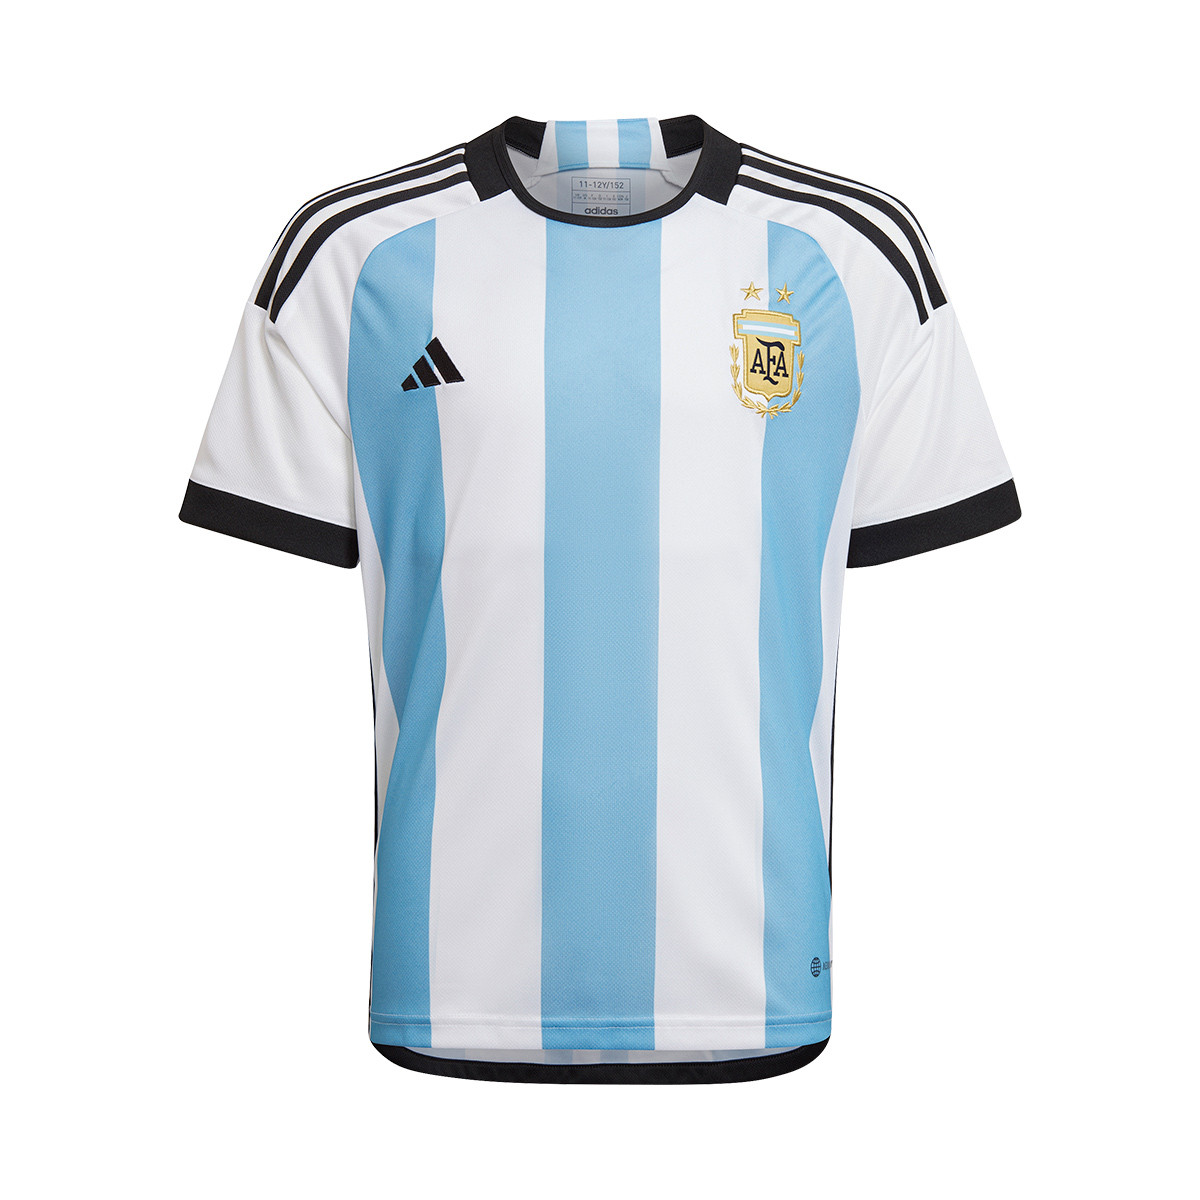 World Cup Argentina championship jerseys, shirts, gear kits